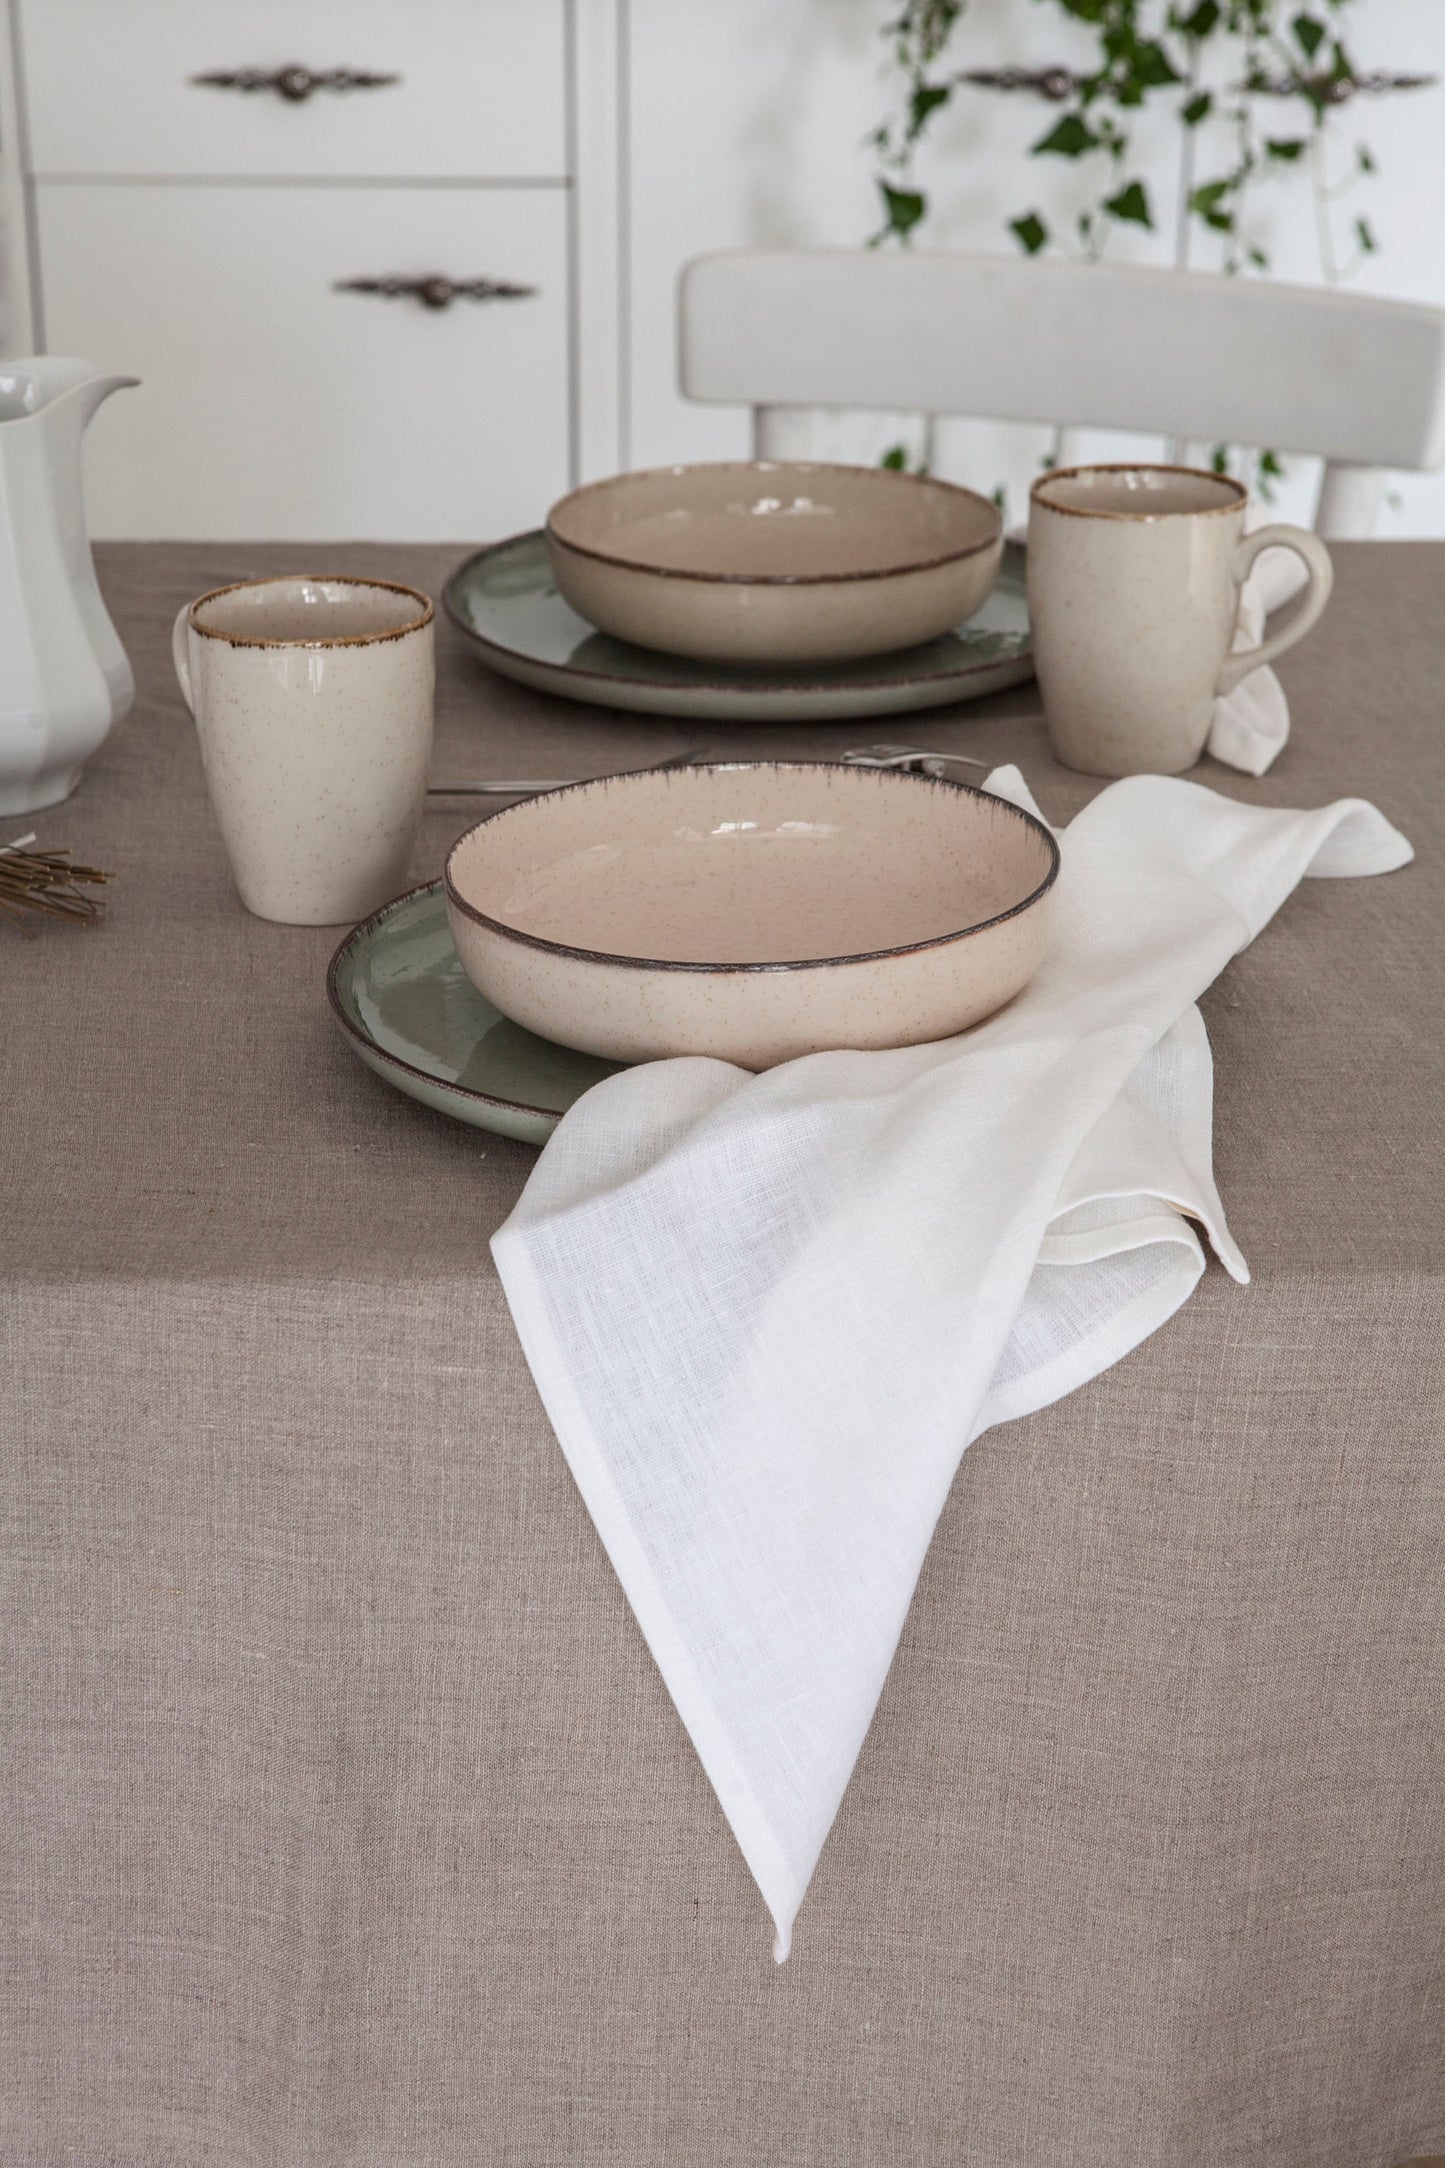 Natural undyed linen tablecloth